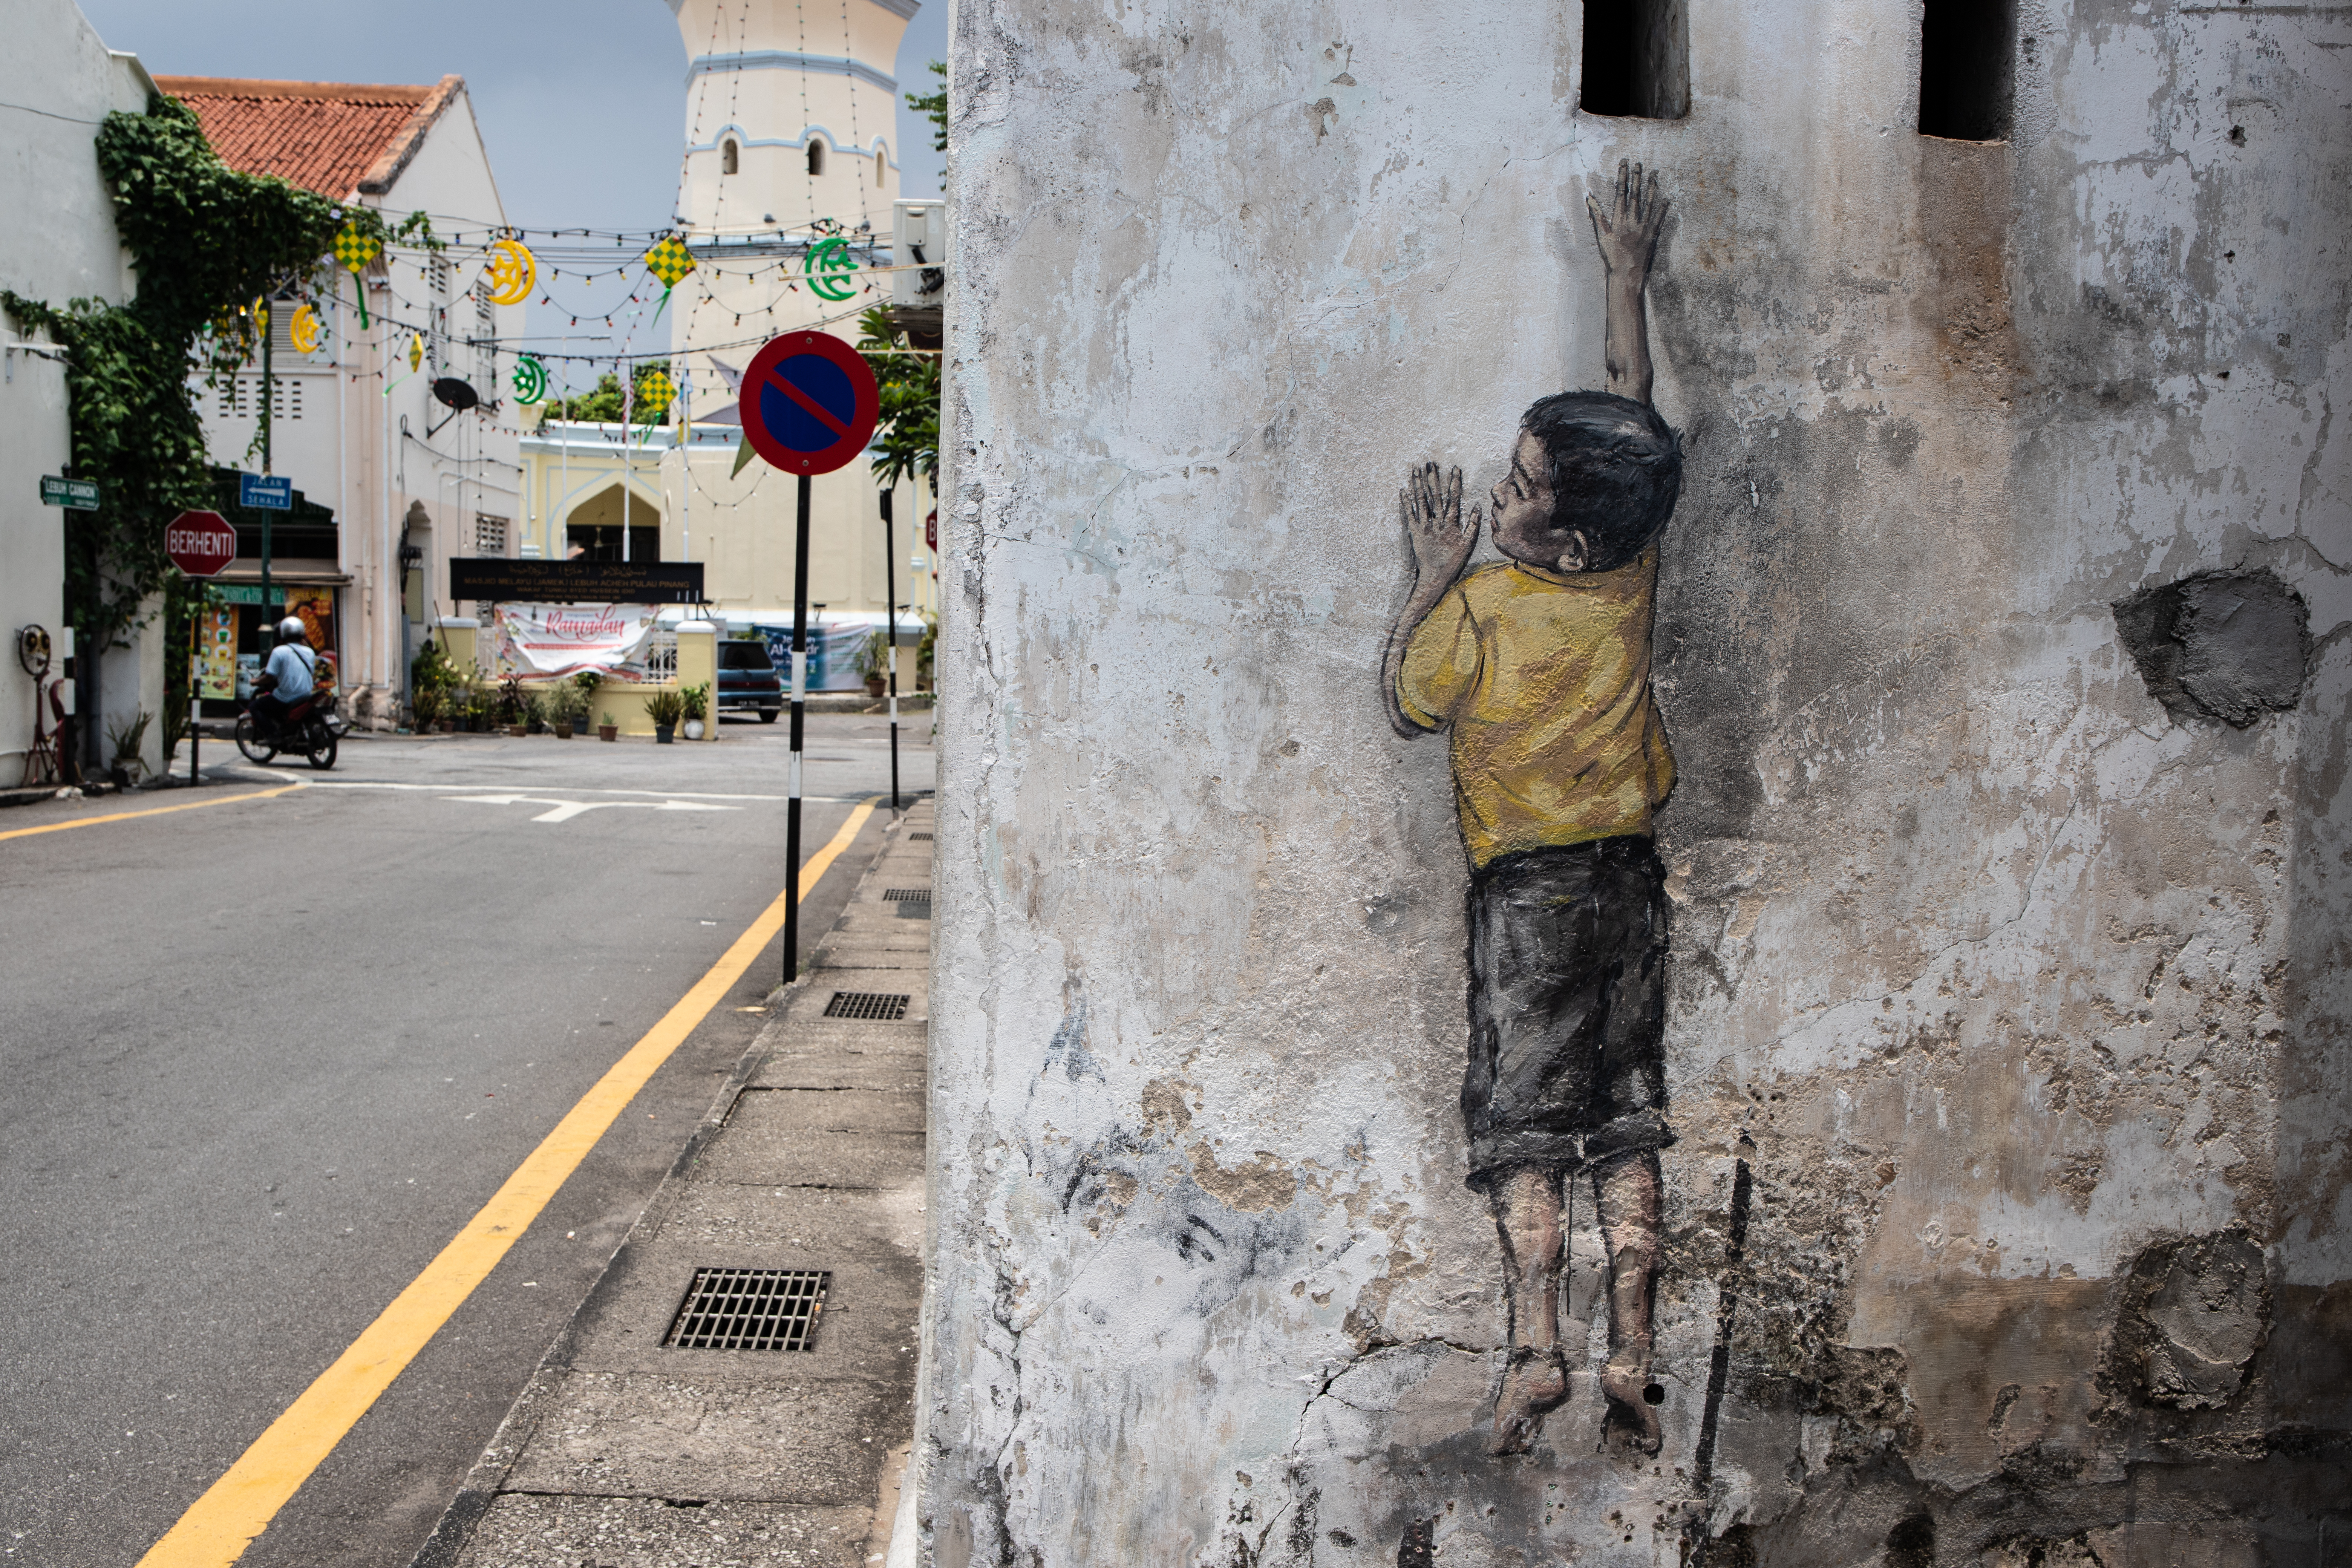 penang street art 2